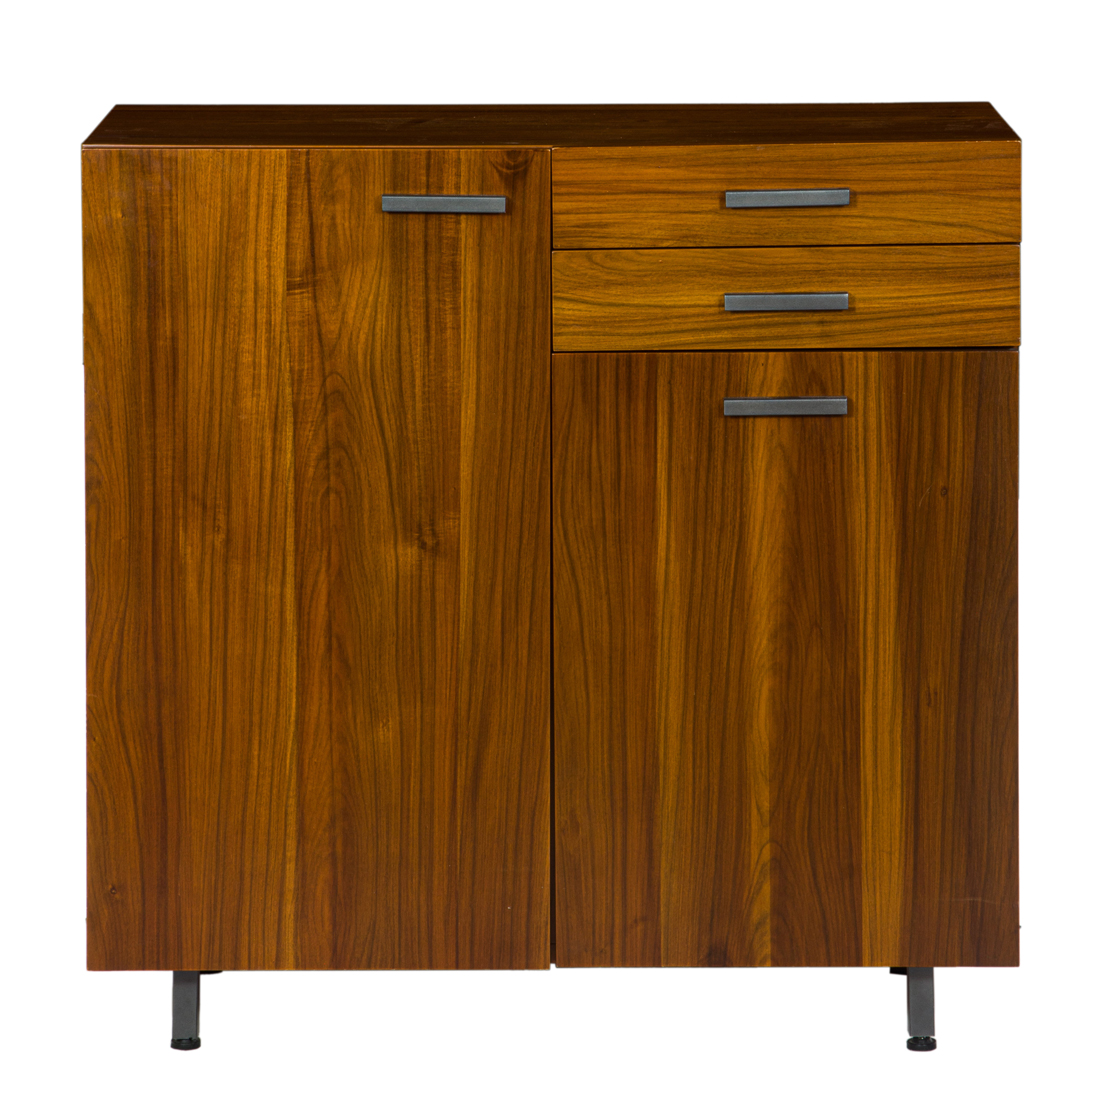 A MODERN CABINET A Modern cabinet  3a12da